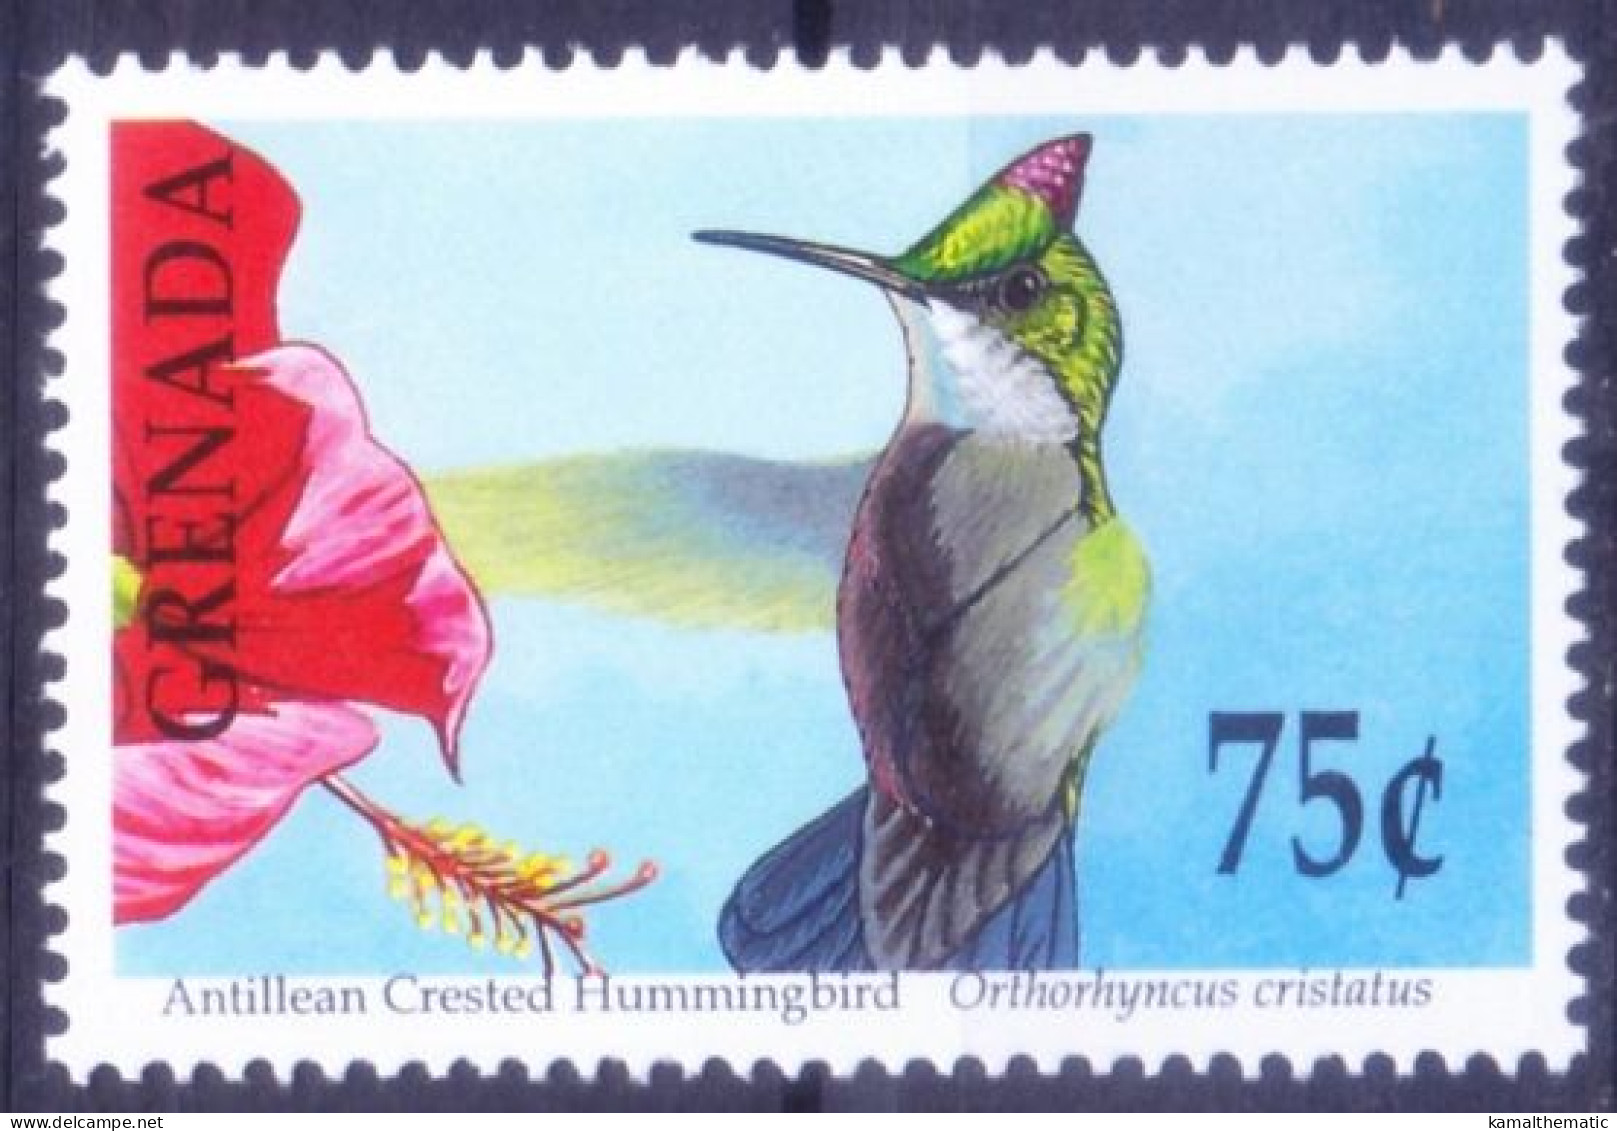 Grenada 1990 MNH, Antillean Crested Hummingbird, Birds - Colibrì